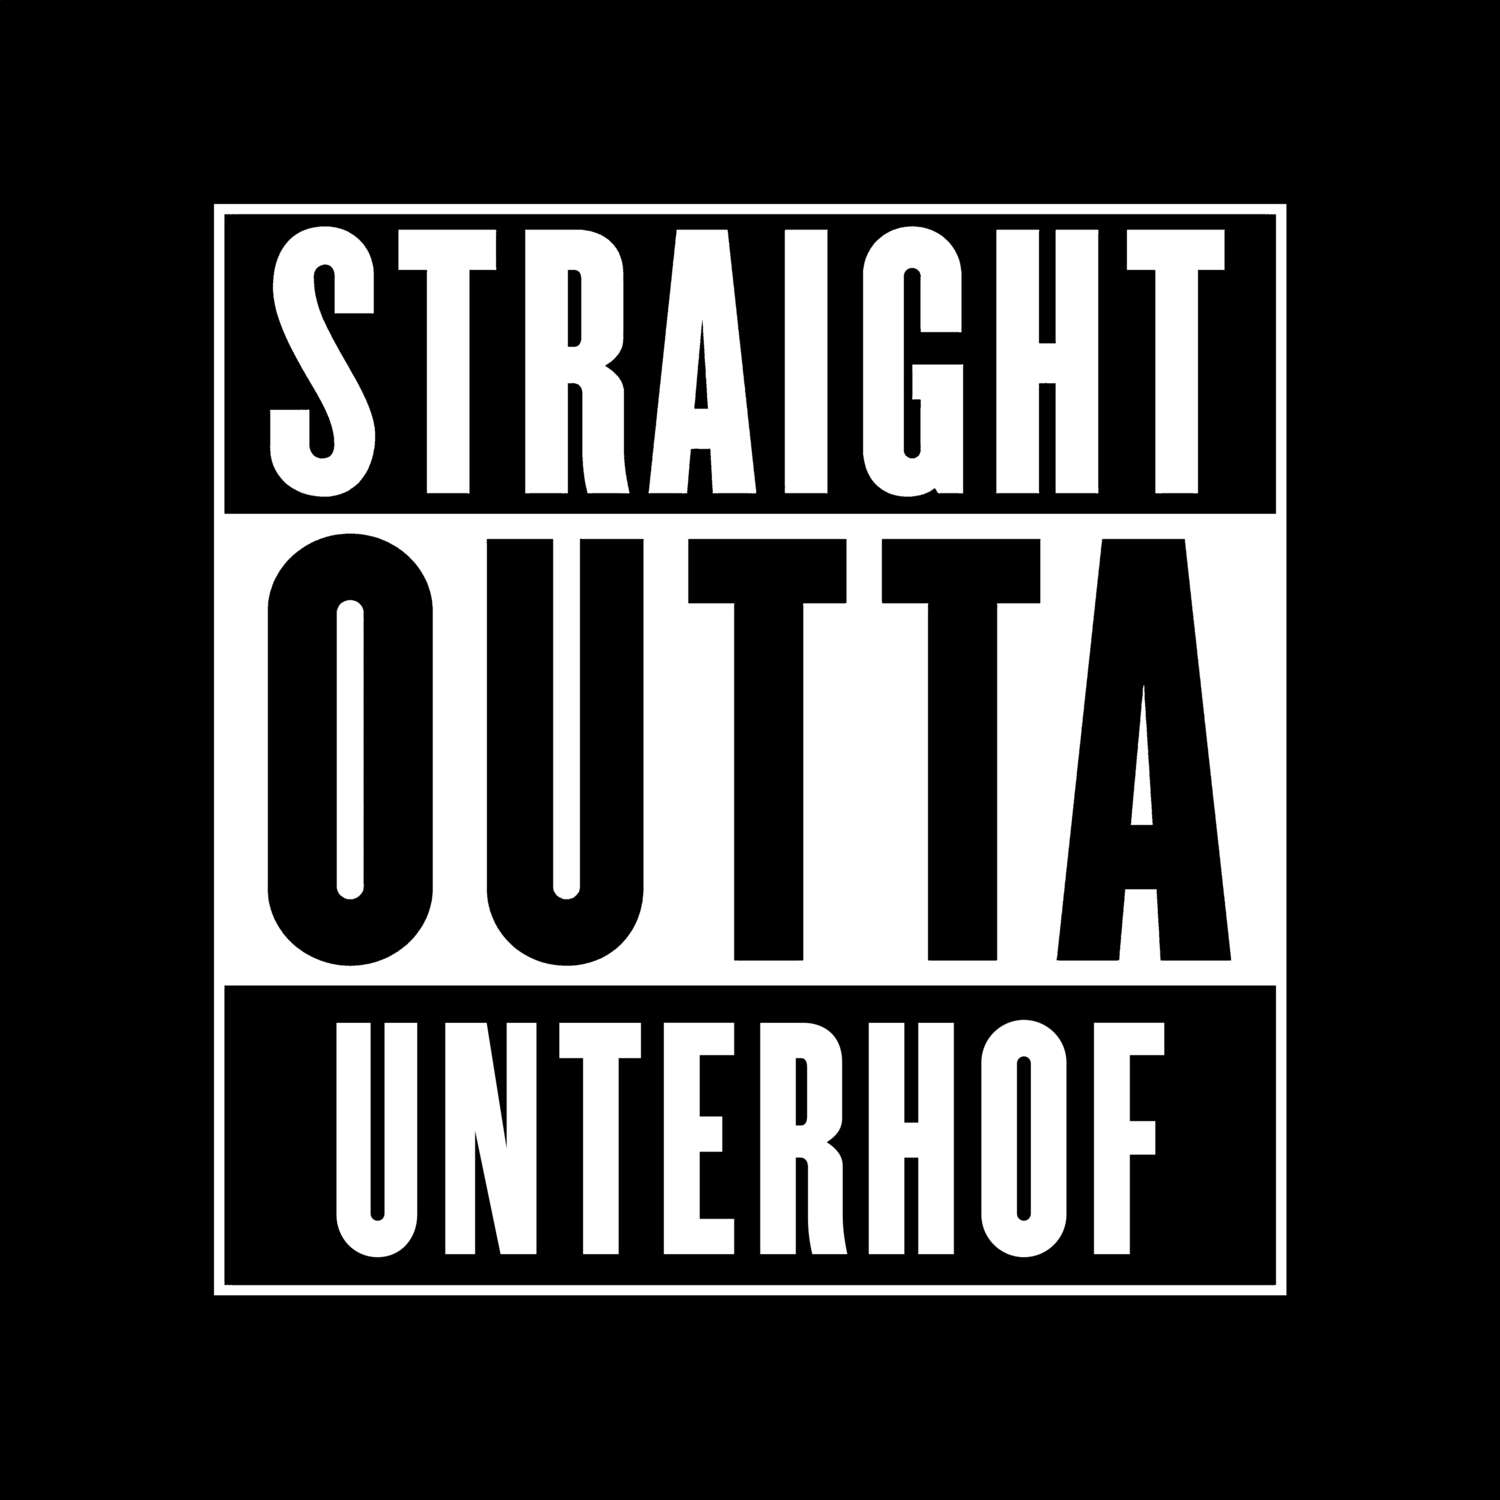 Unterhof T-Shirt »Straight Outta«